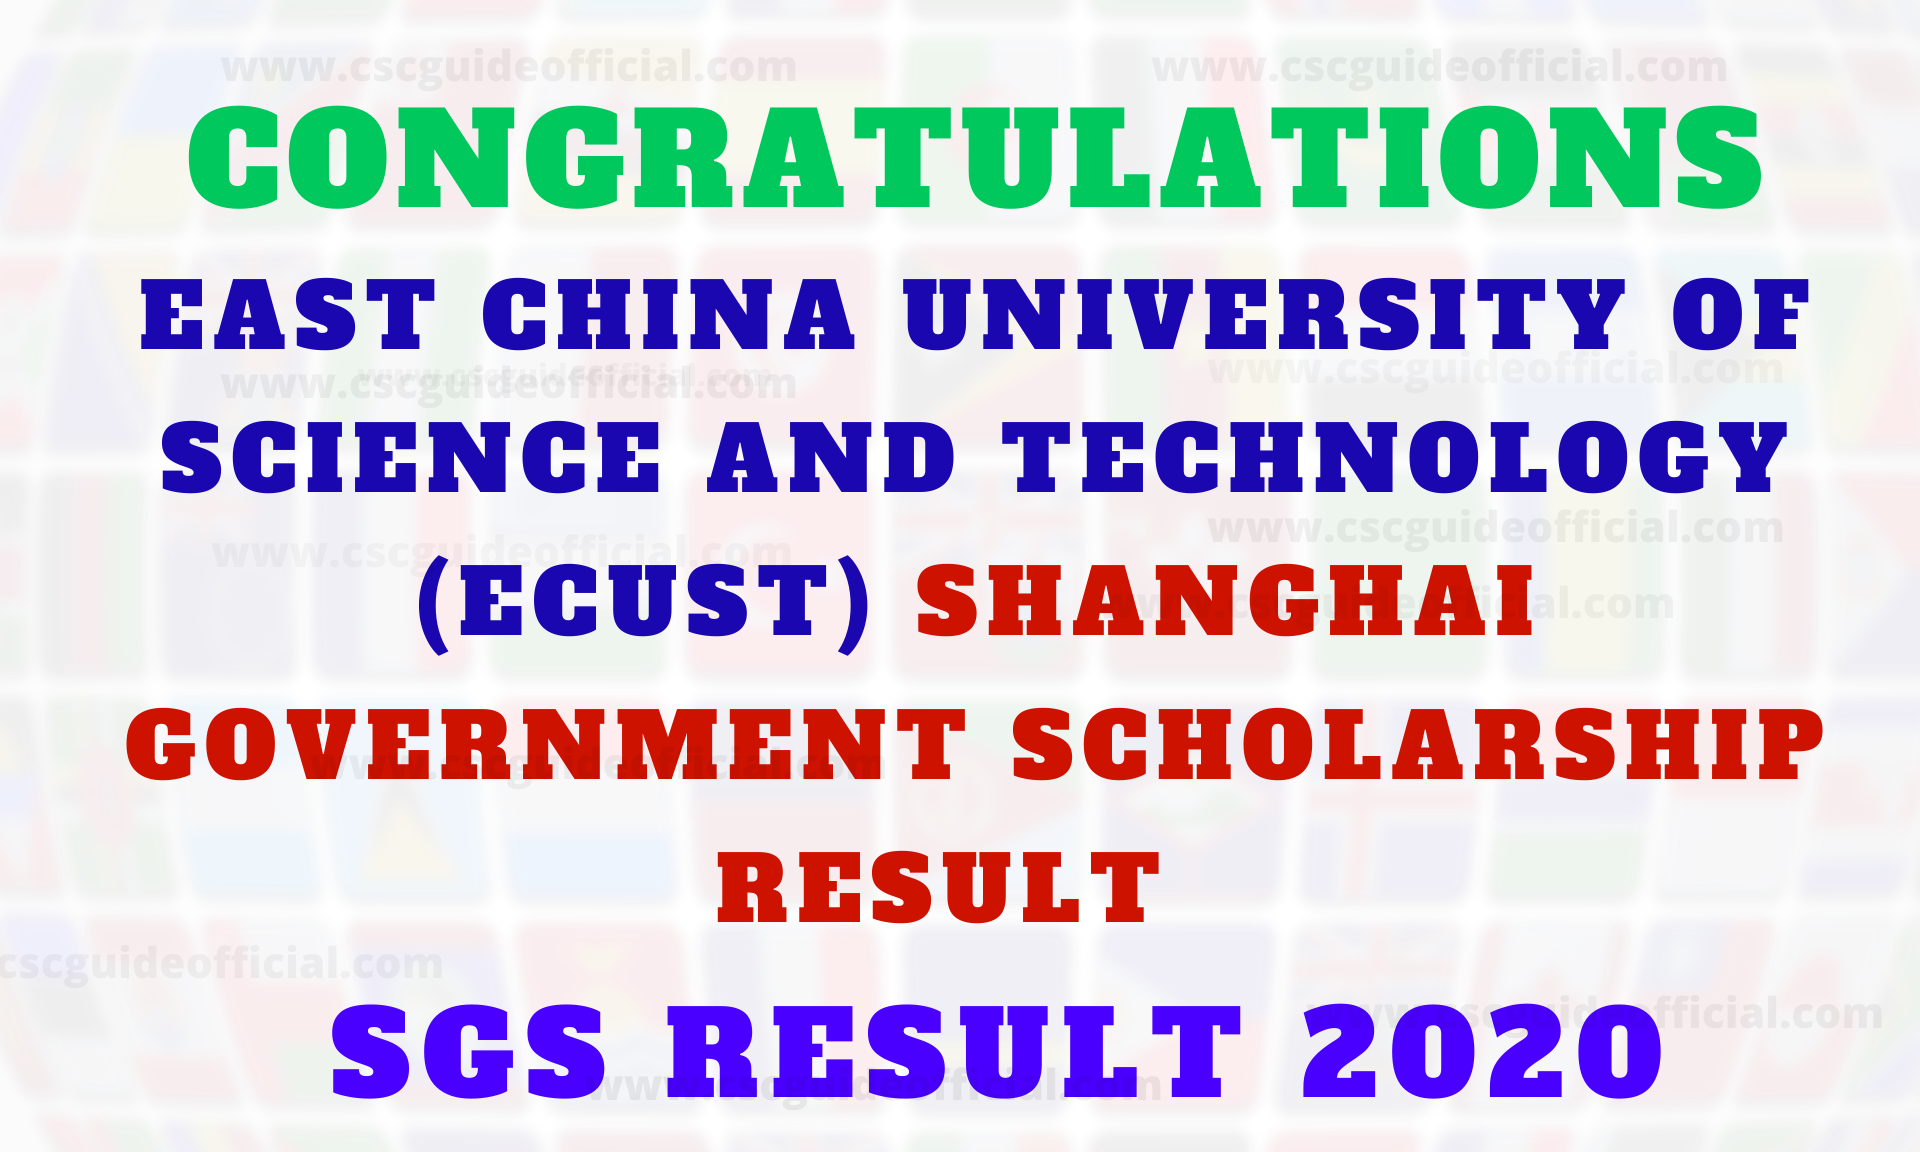 ecust shanghai government scholarship result